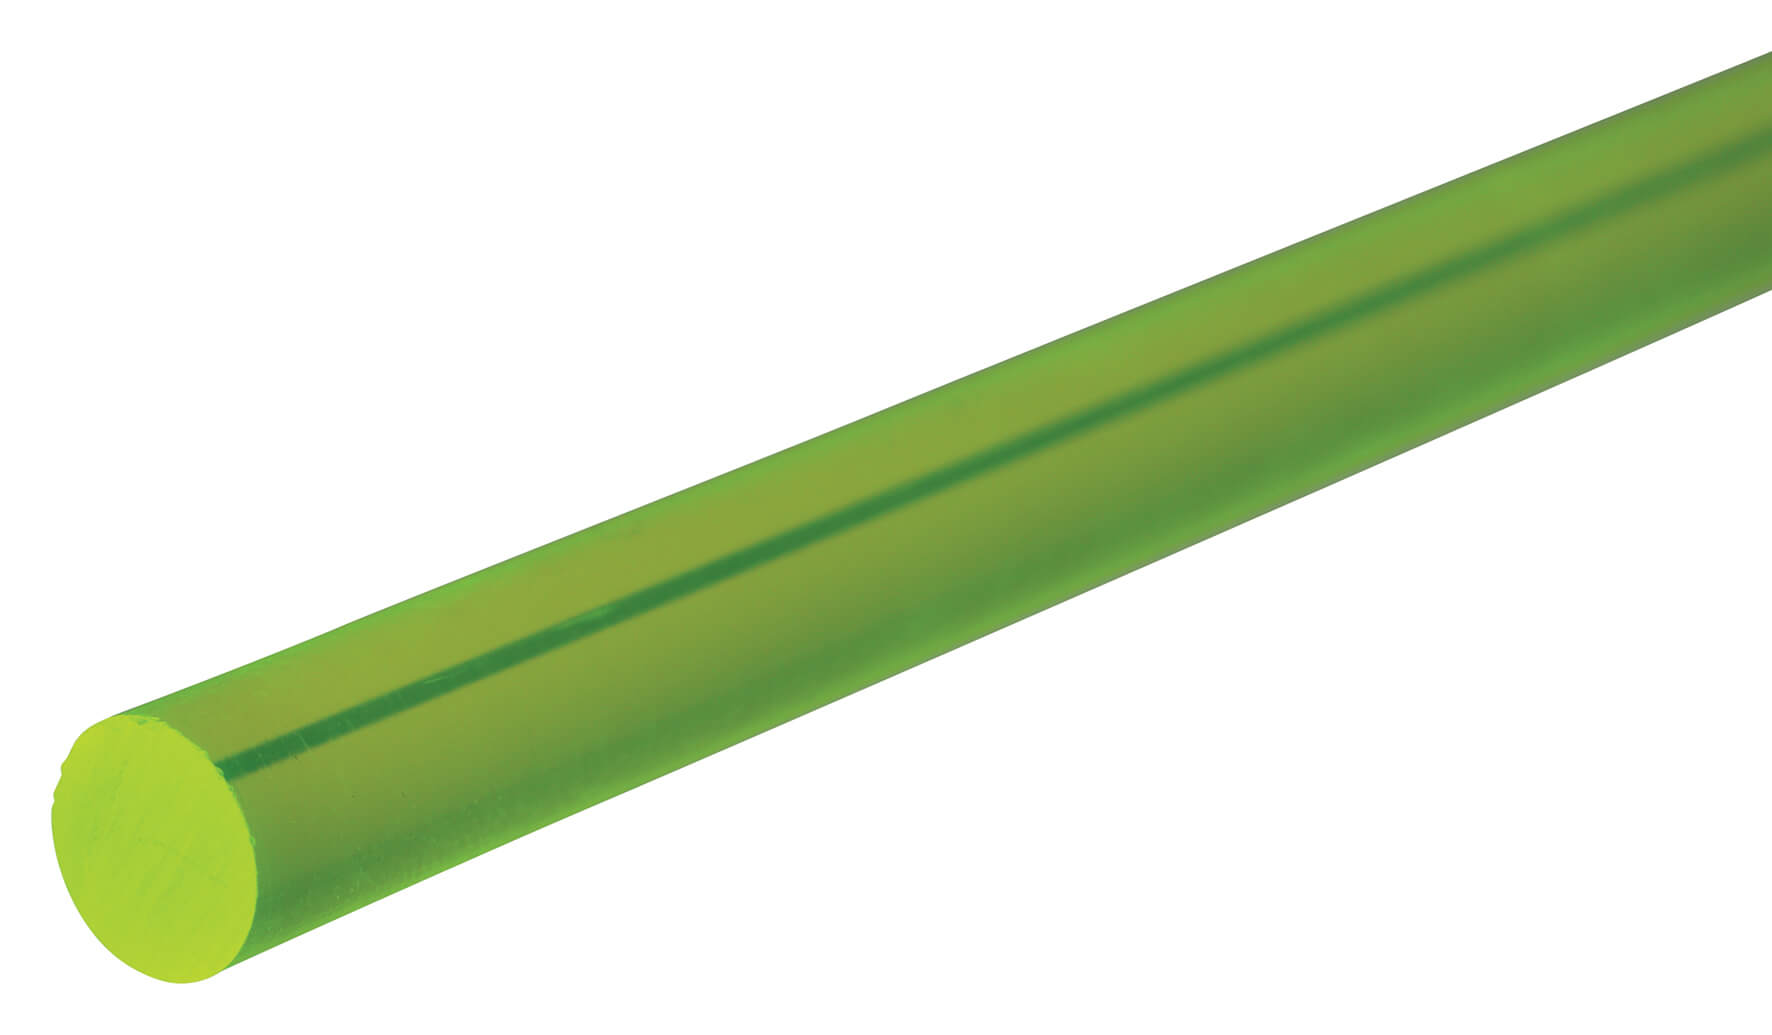 Fluorescent Acrylic Rod 4mm x 500mm - Green